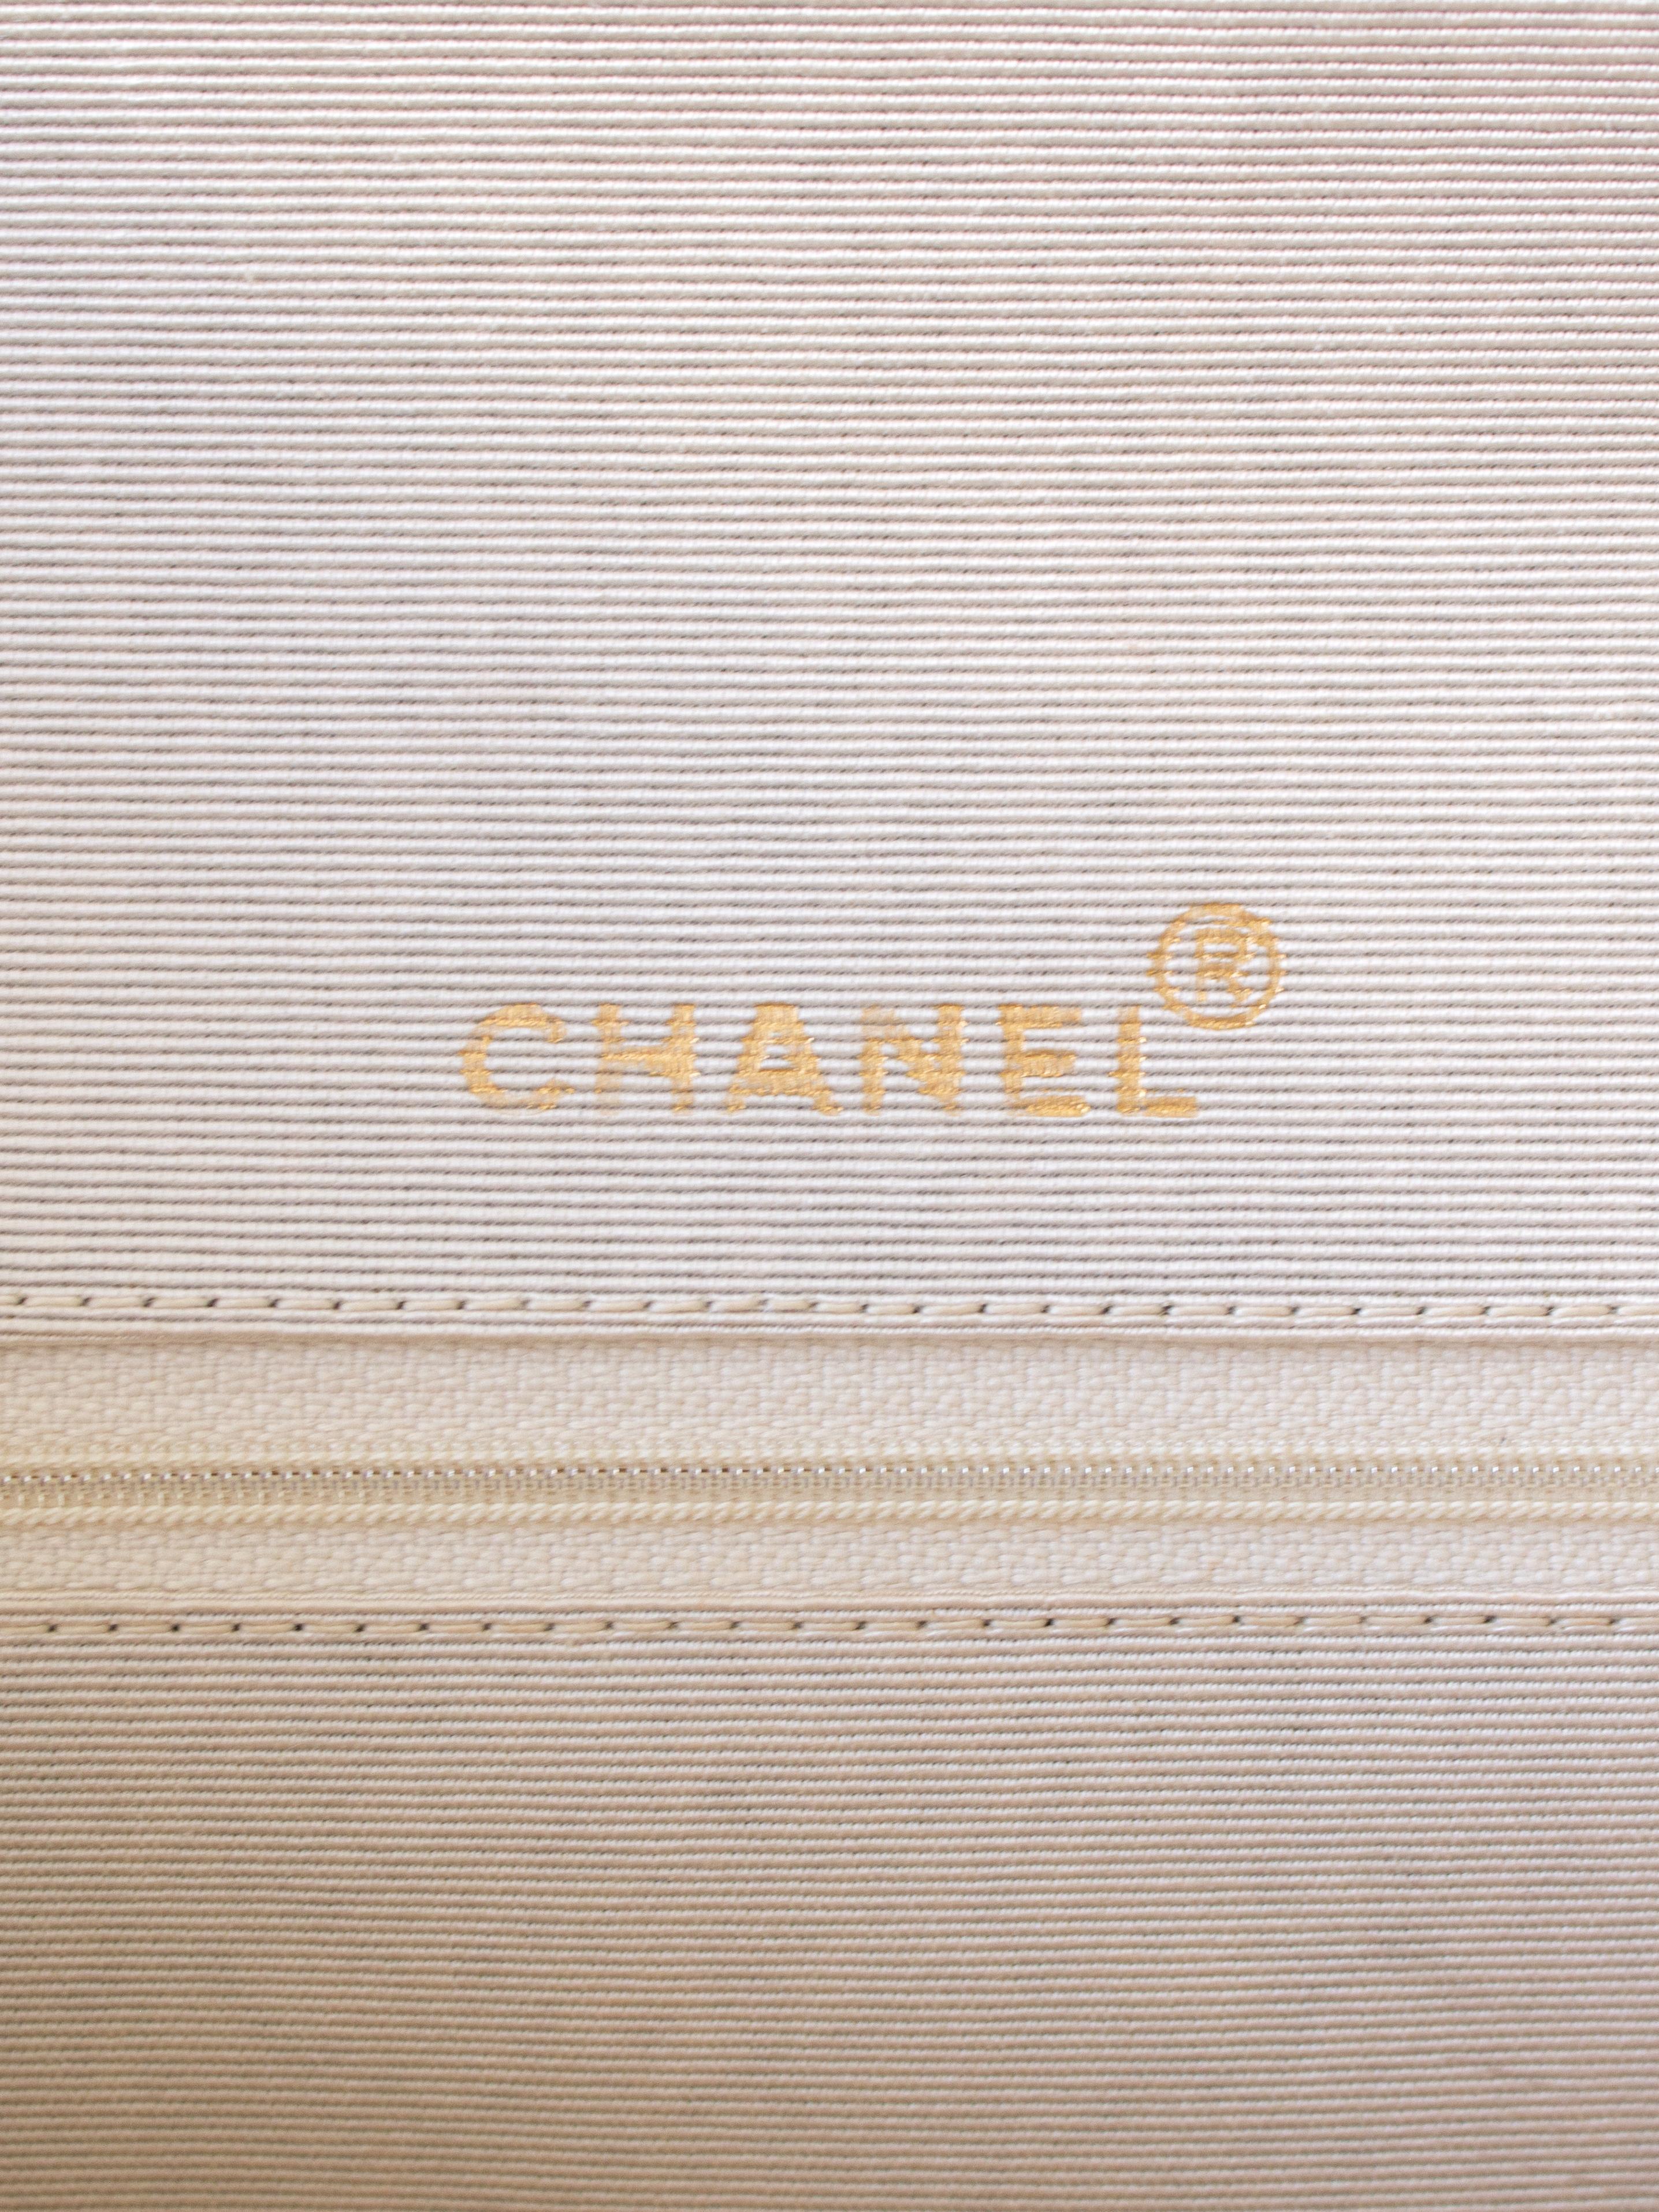 Rare Chanel Vintage S/S1991 Champagne Gold Sequin Medium Flap Bag For Sale 10